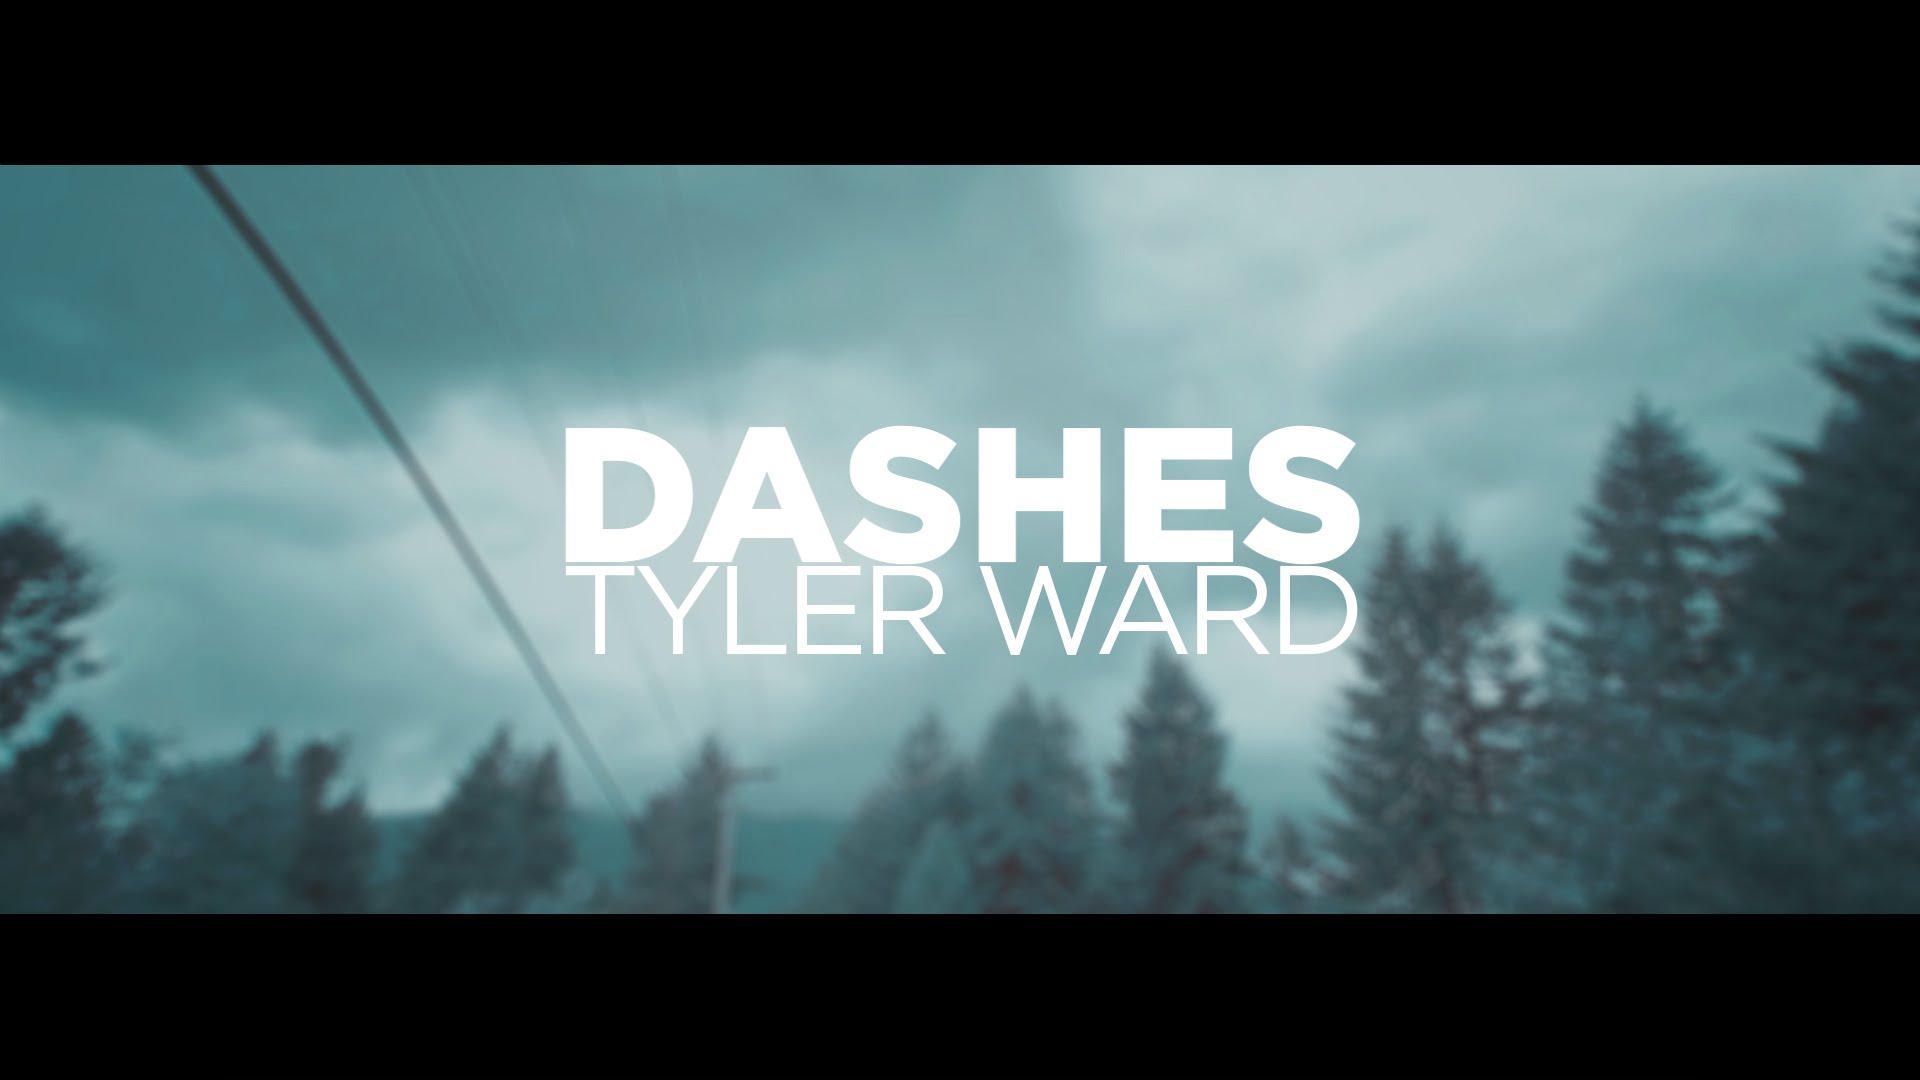 Tyler Ward – Dashes